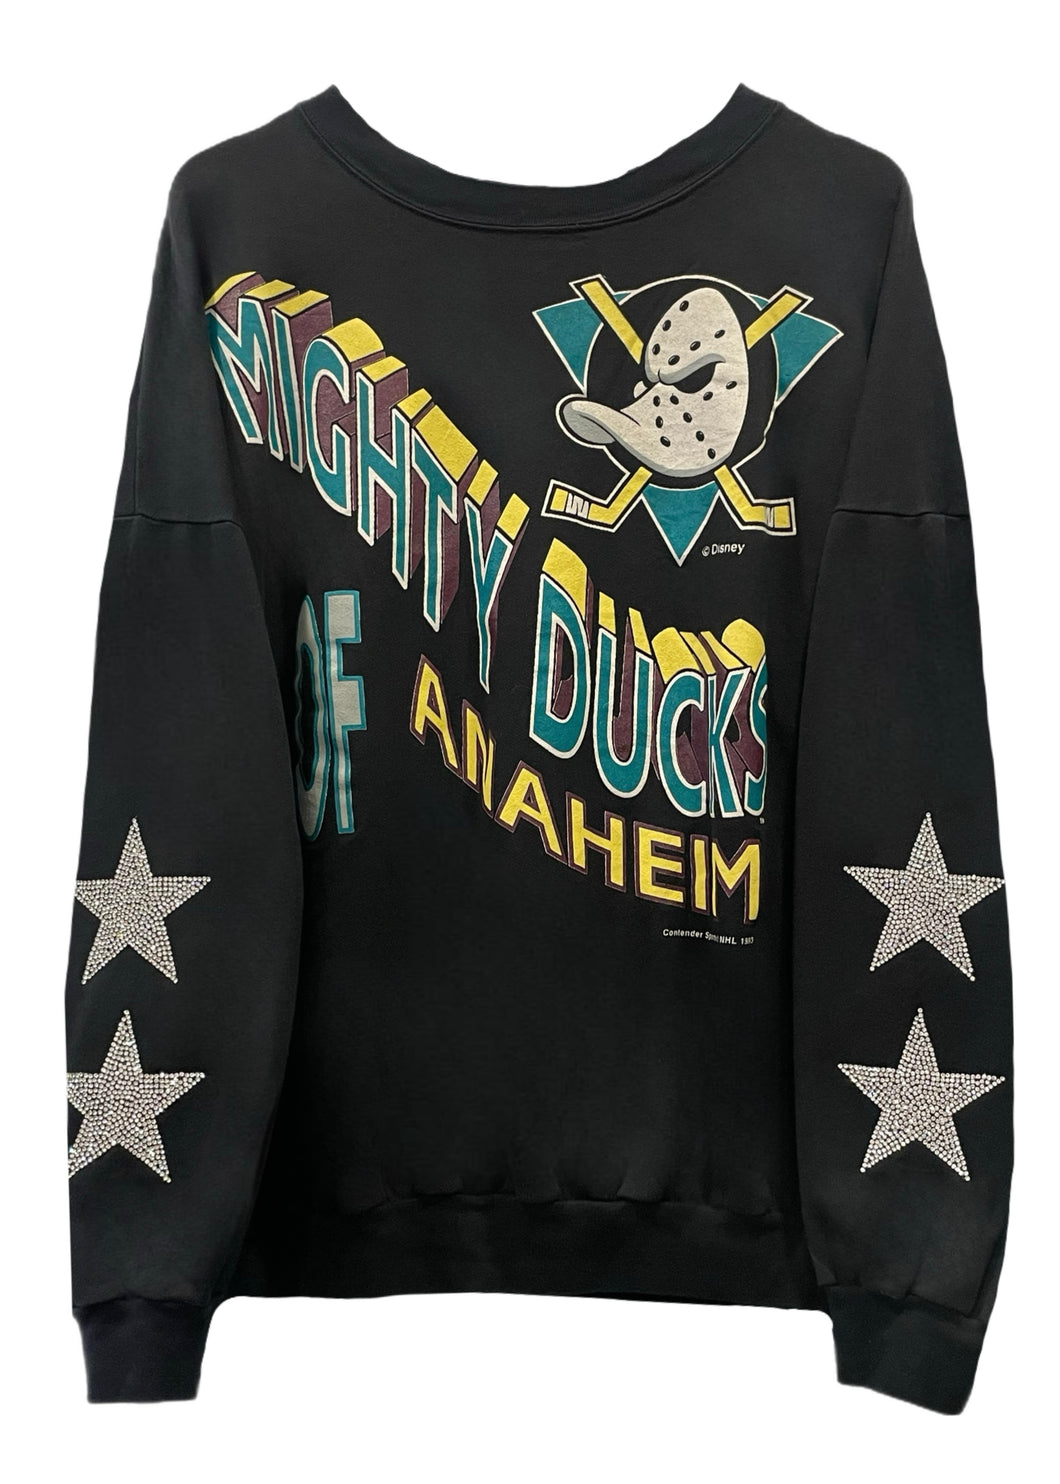 Anaheim Ducks, NHL One of a KIND Vintage “Mighty Ducks” Rare Find Sweatshirt with Crystal Star Design - Size: M/L